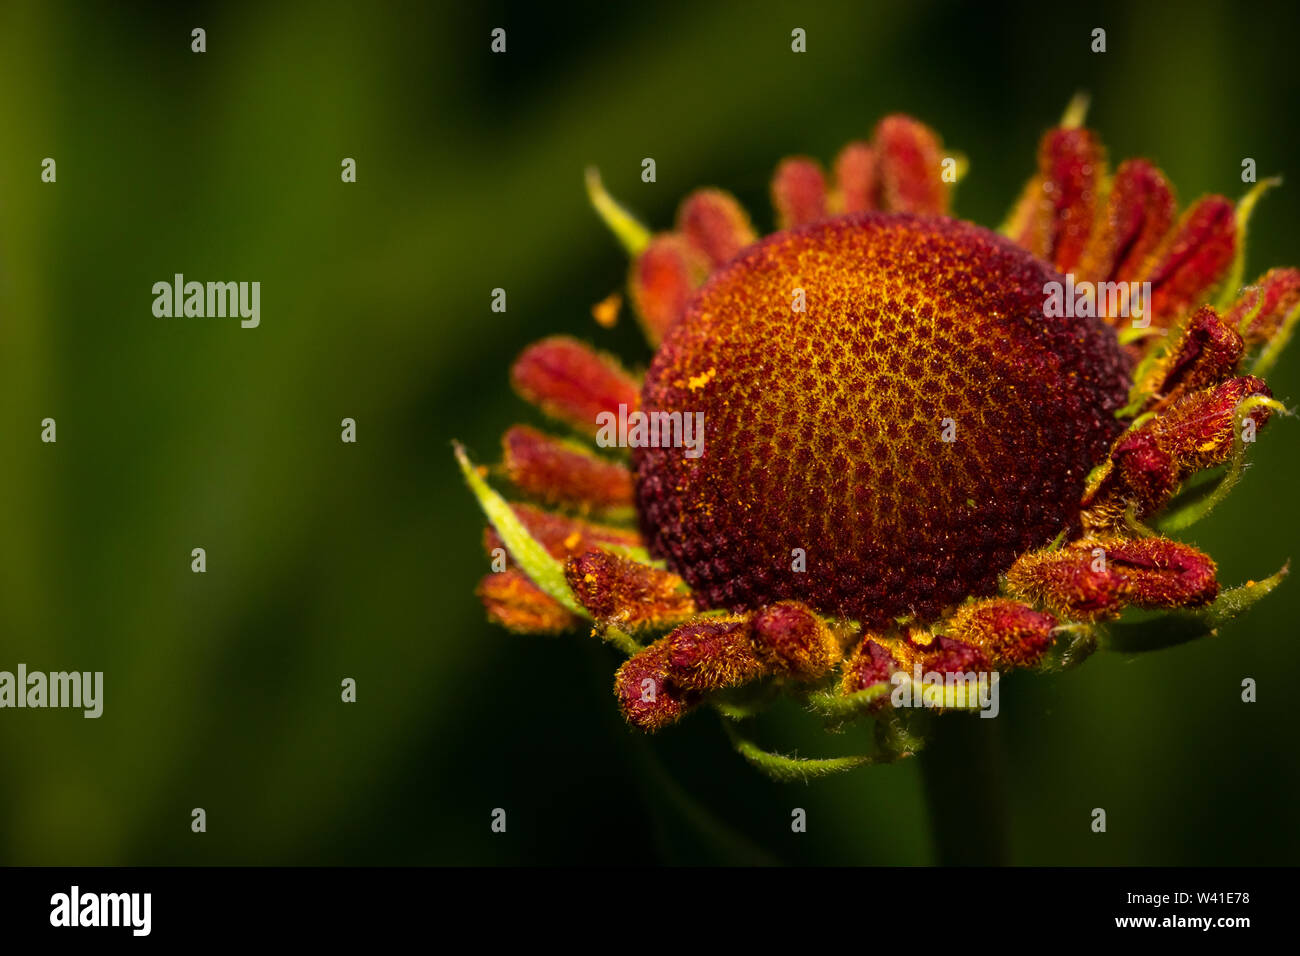 beautiful corolla of a red daisy flower macro close up image Stock Photo